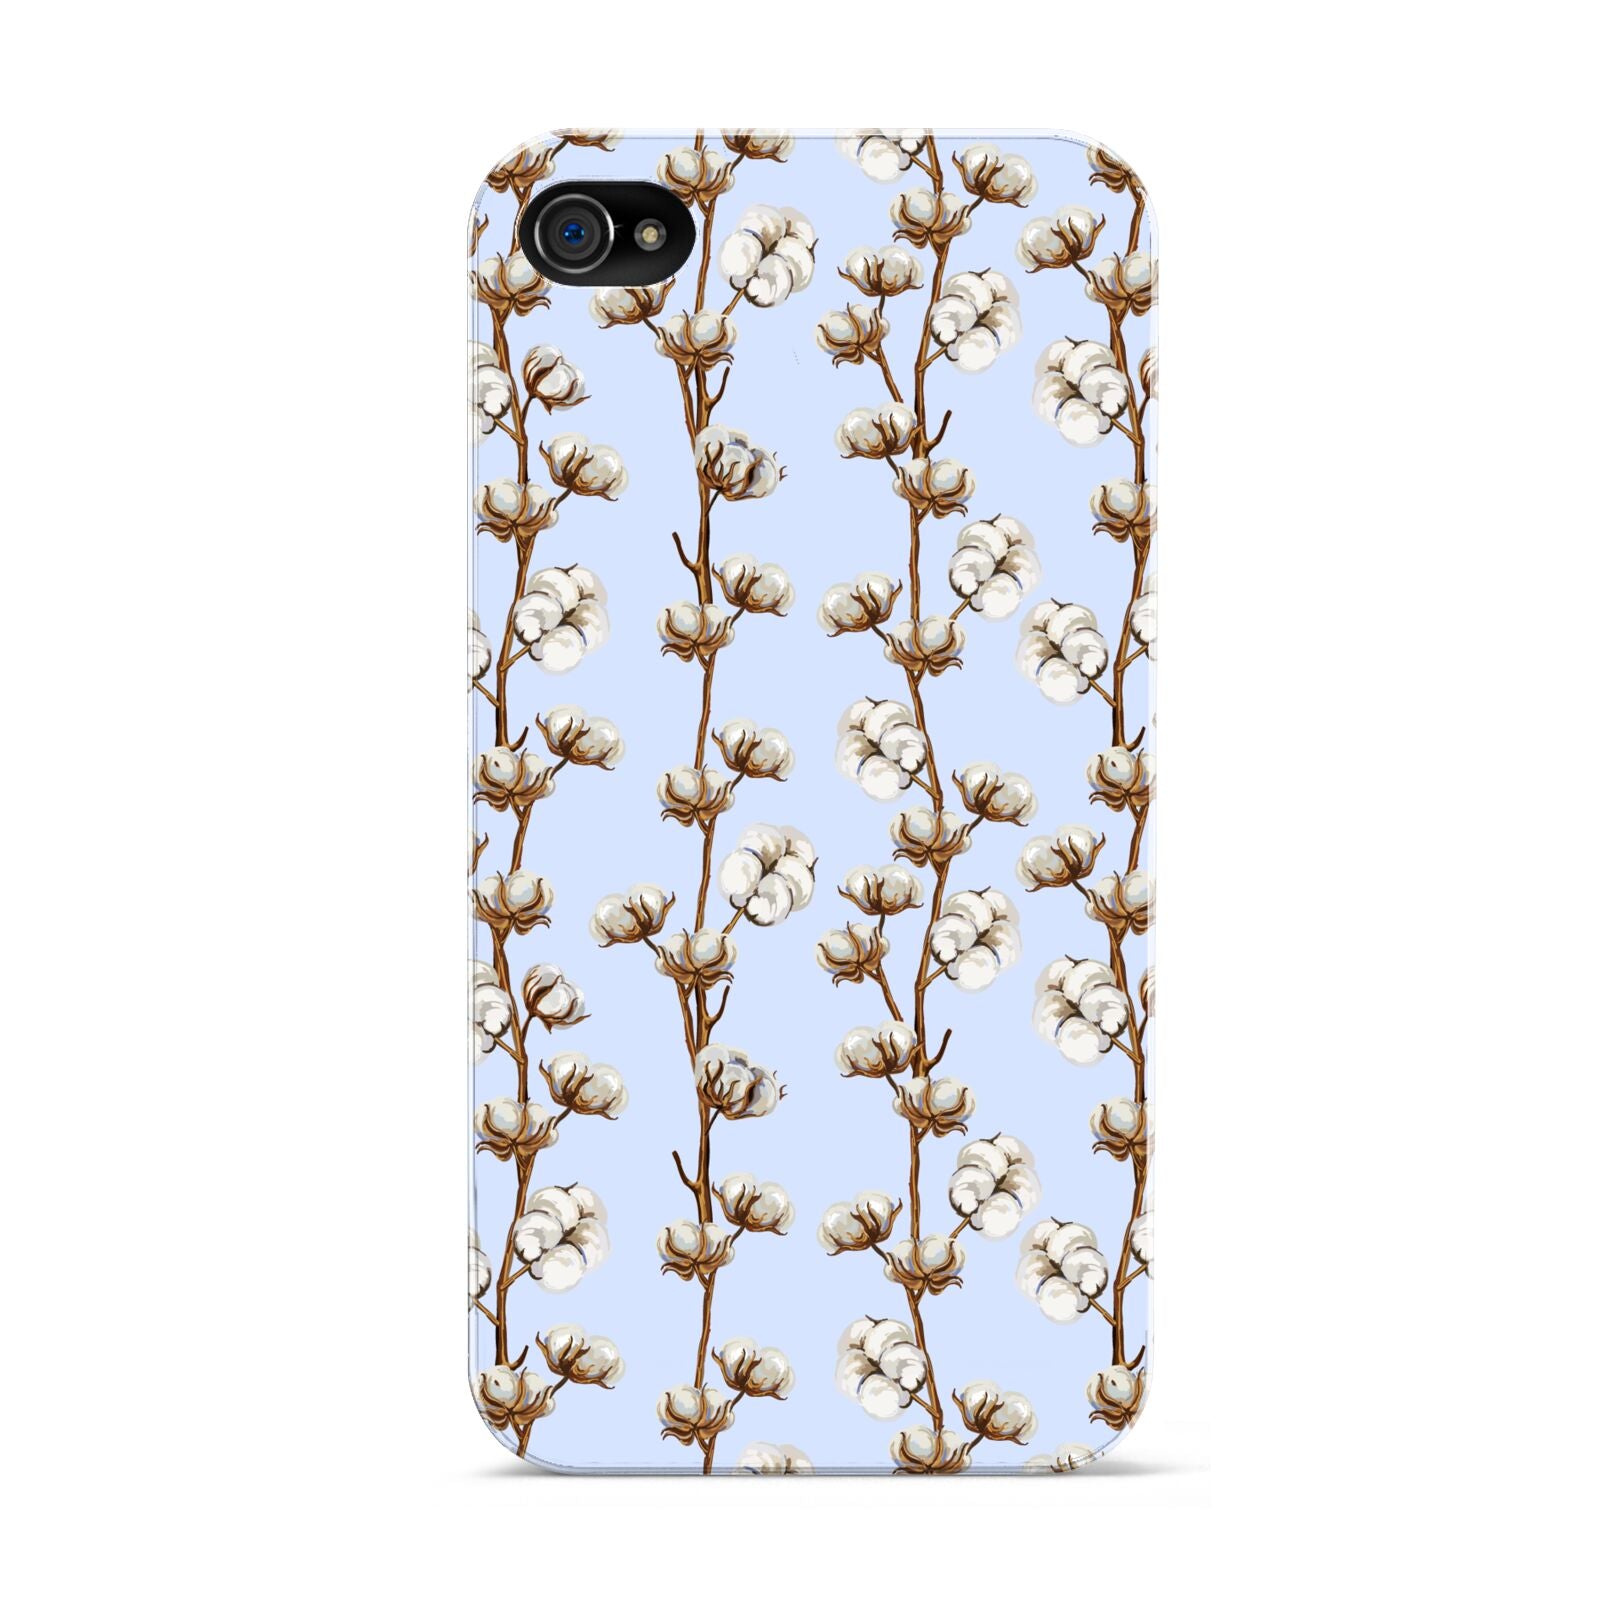 Cotton Branch Apple iPhone 4s Case